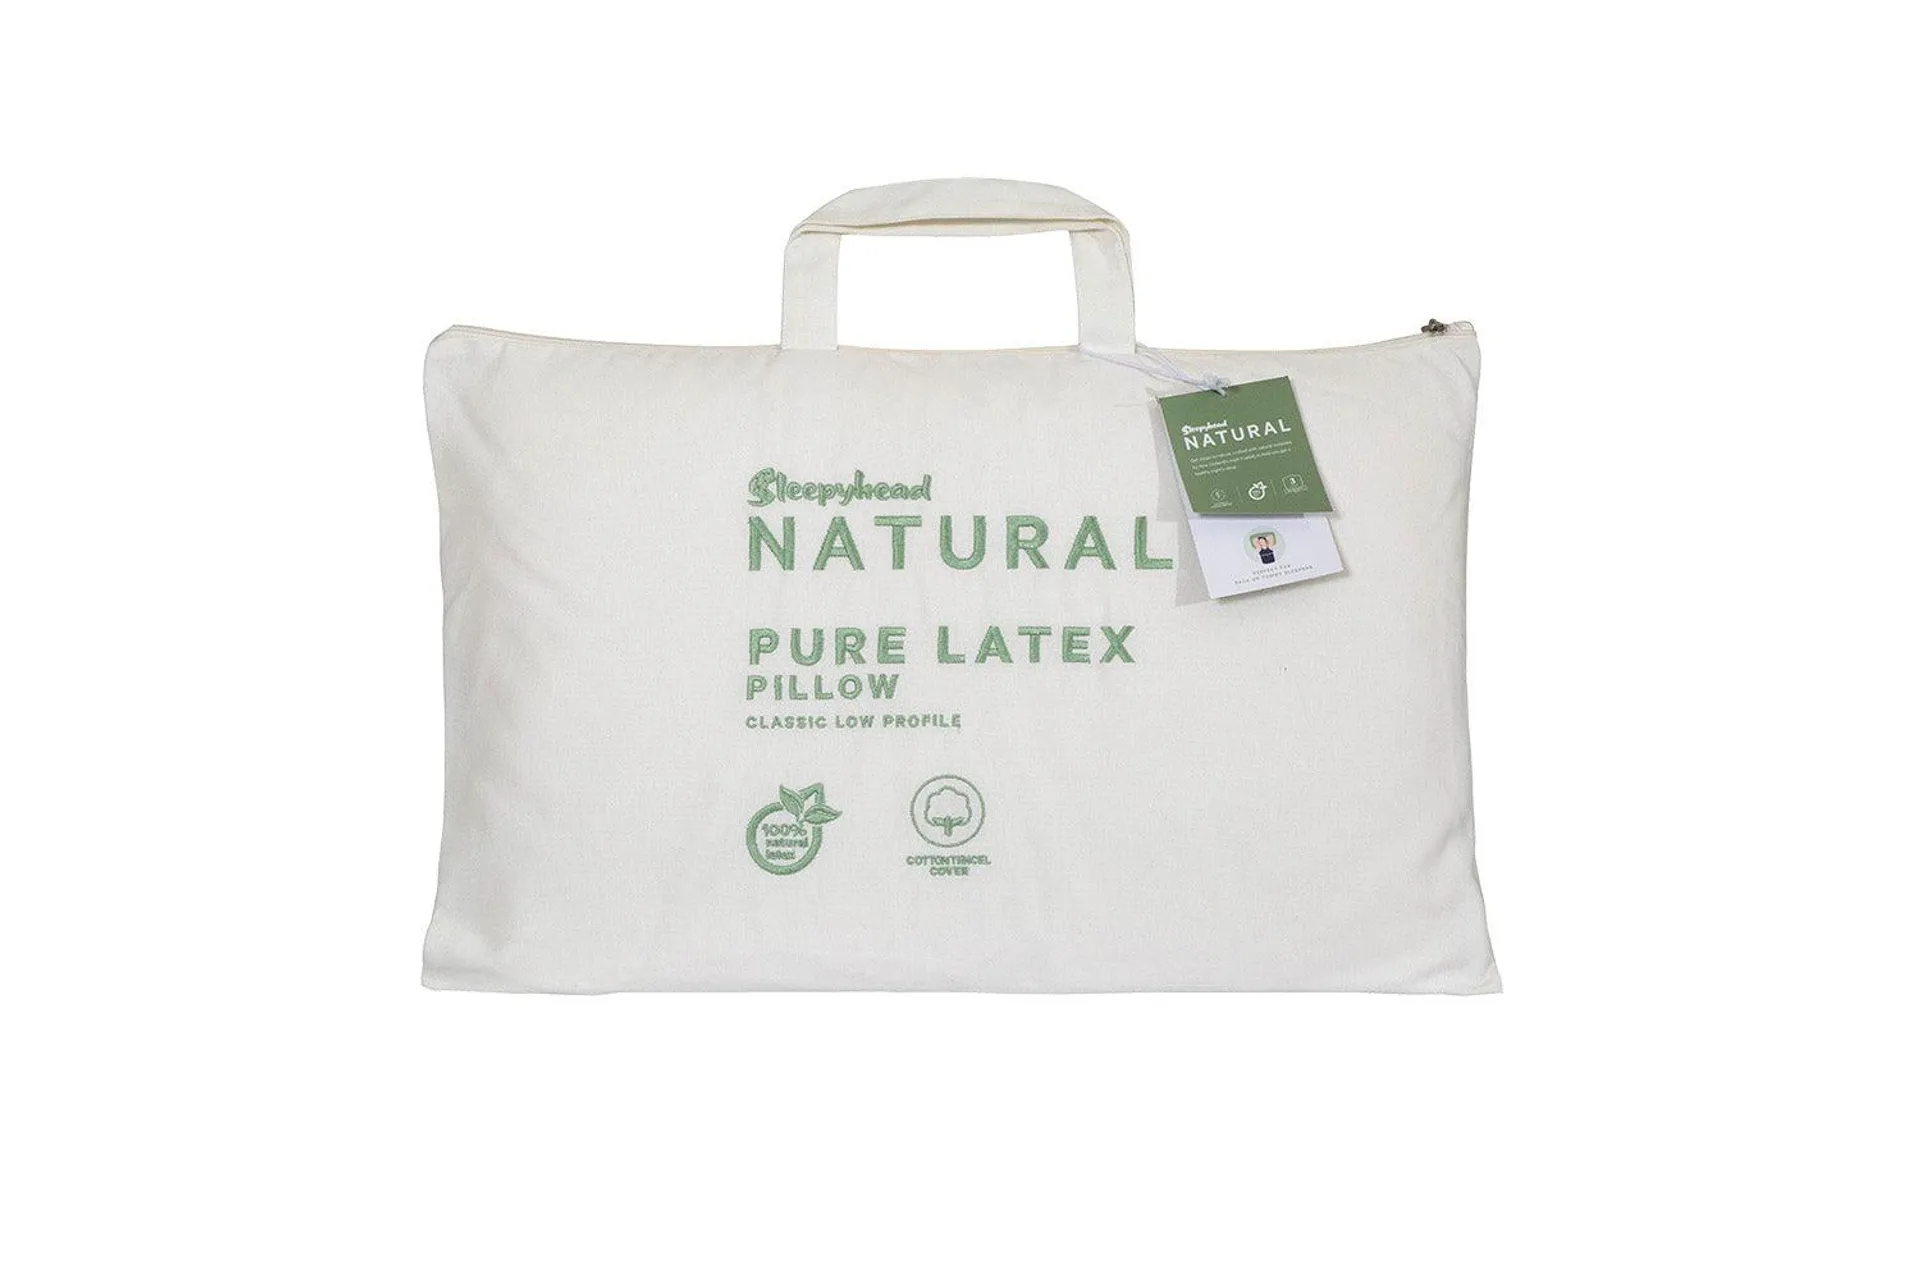 Sleepyhead Natural Pure Latex Classic Low Profile Pillow